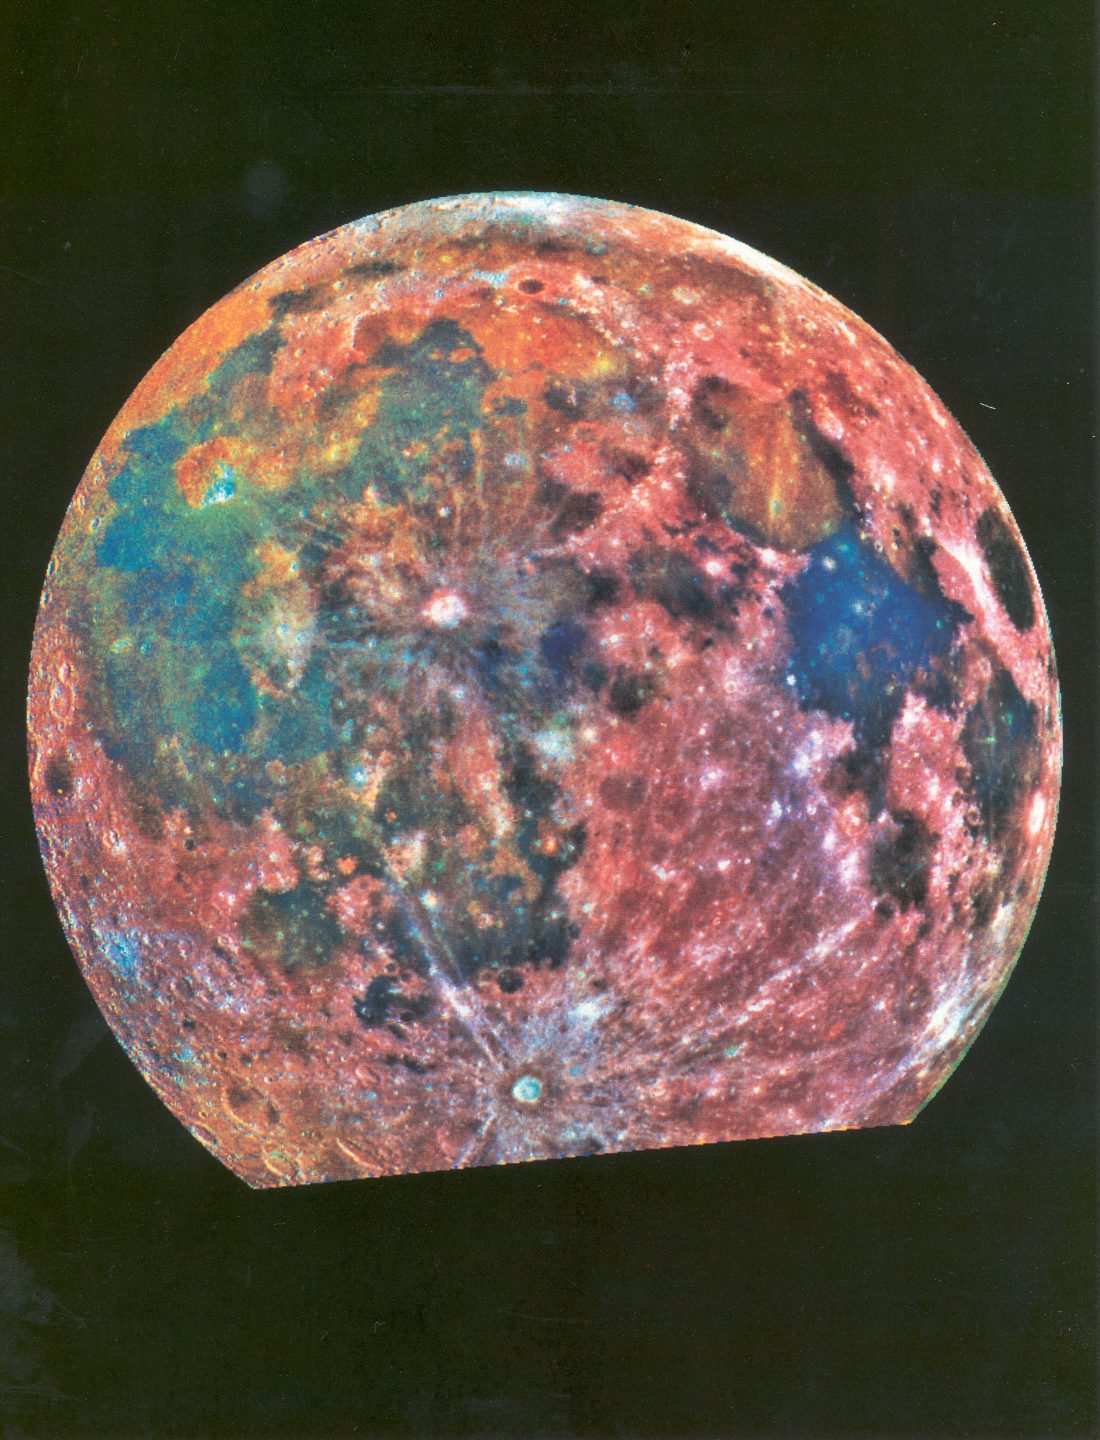 A combined false-colour image of the moon.